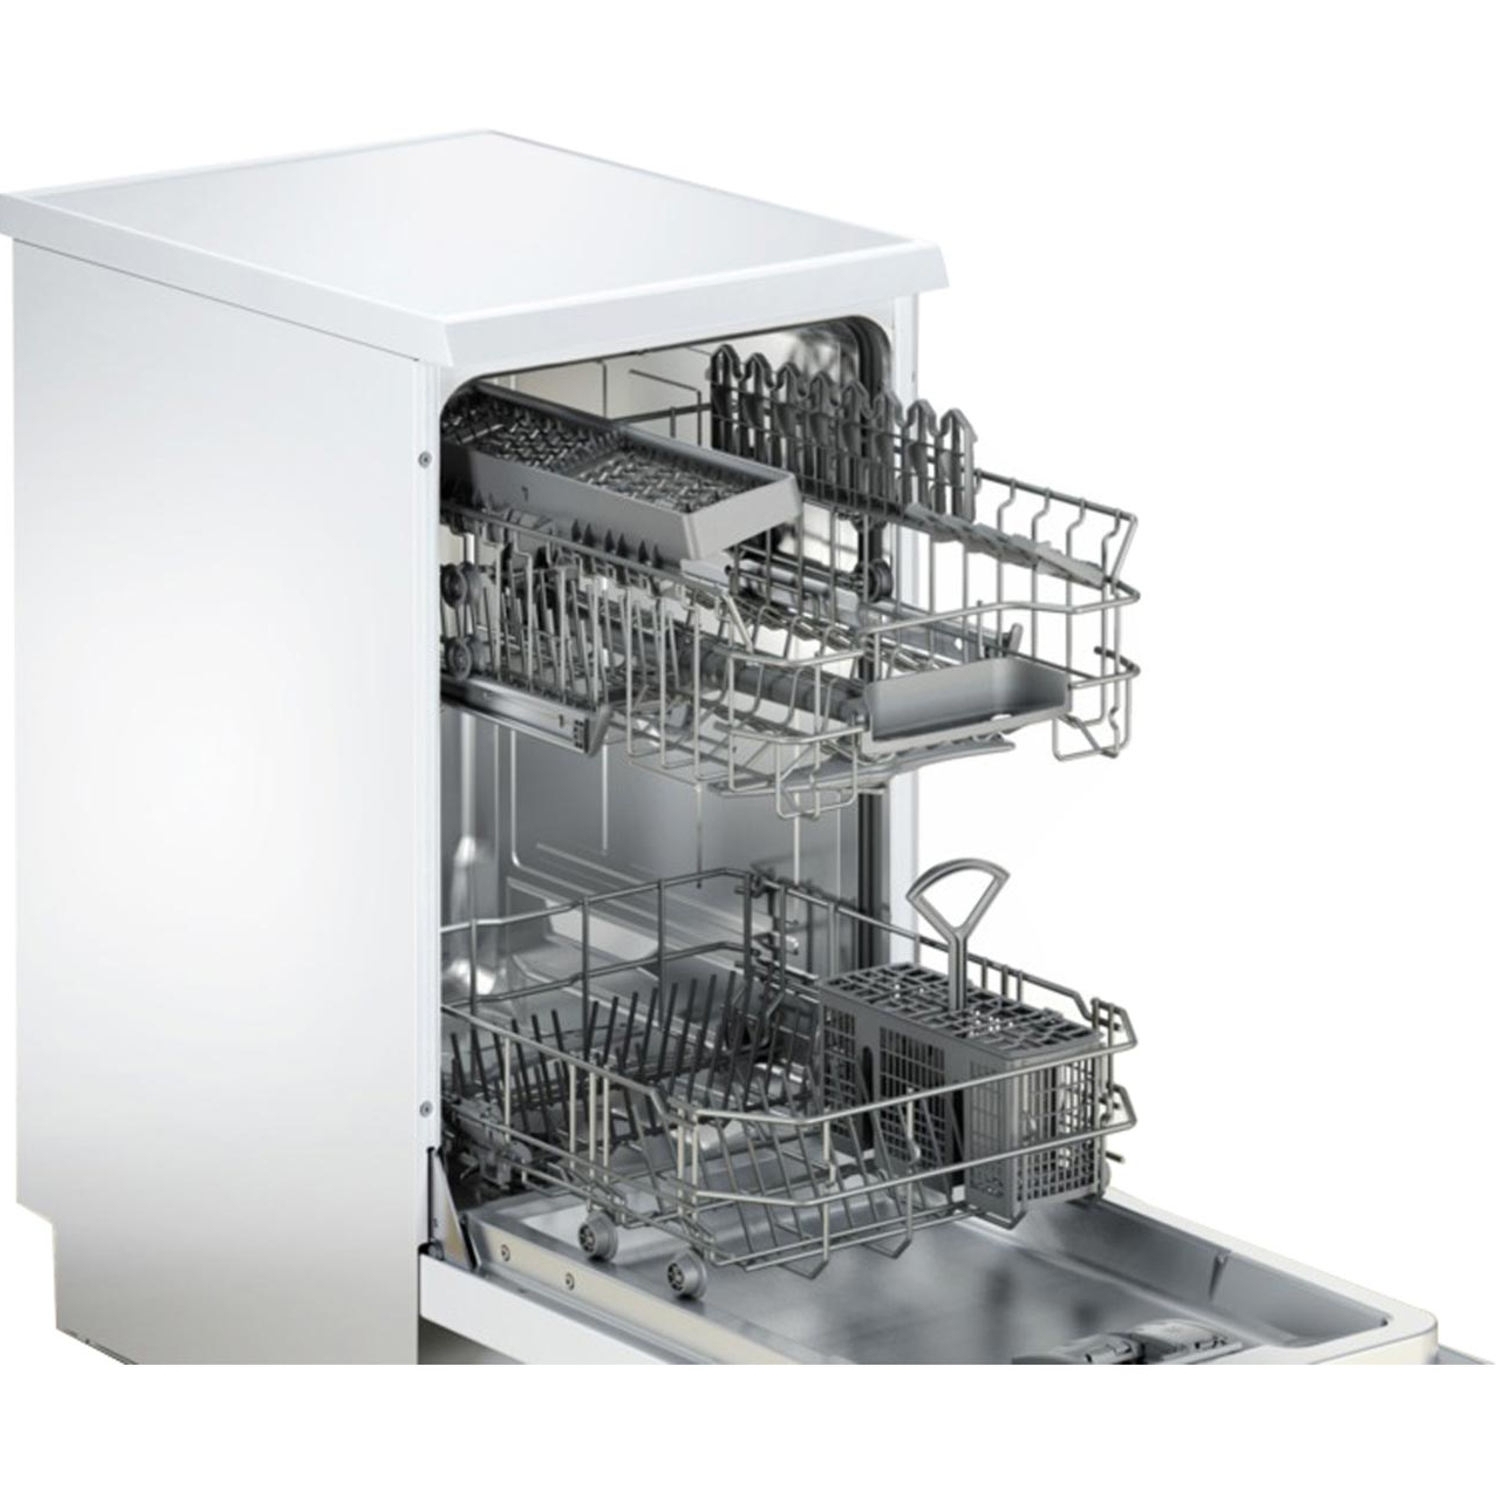 Bosch Slimline Dishwasher - White - A+ Rated - 1